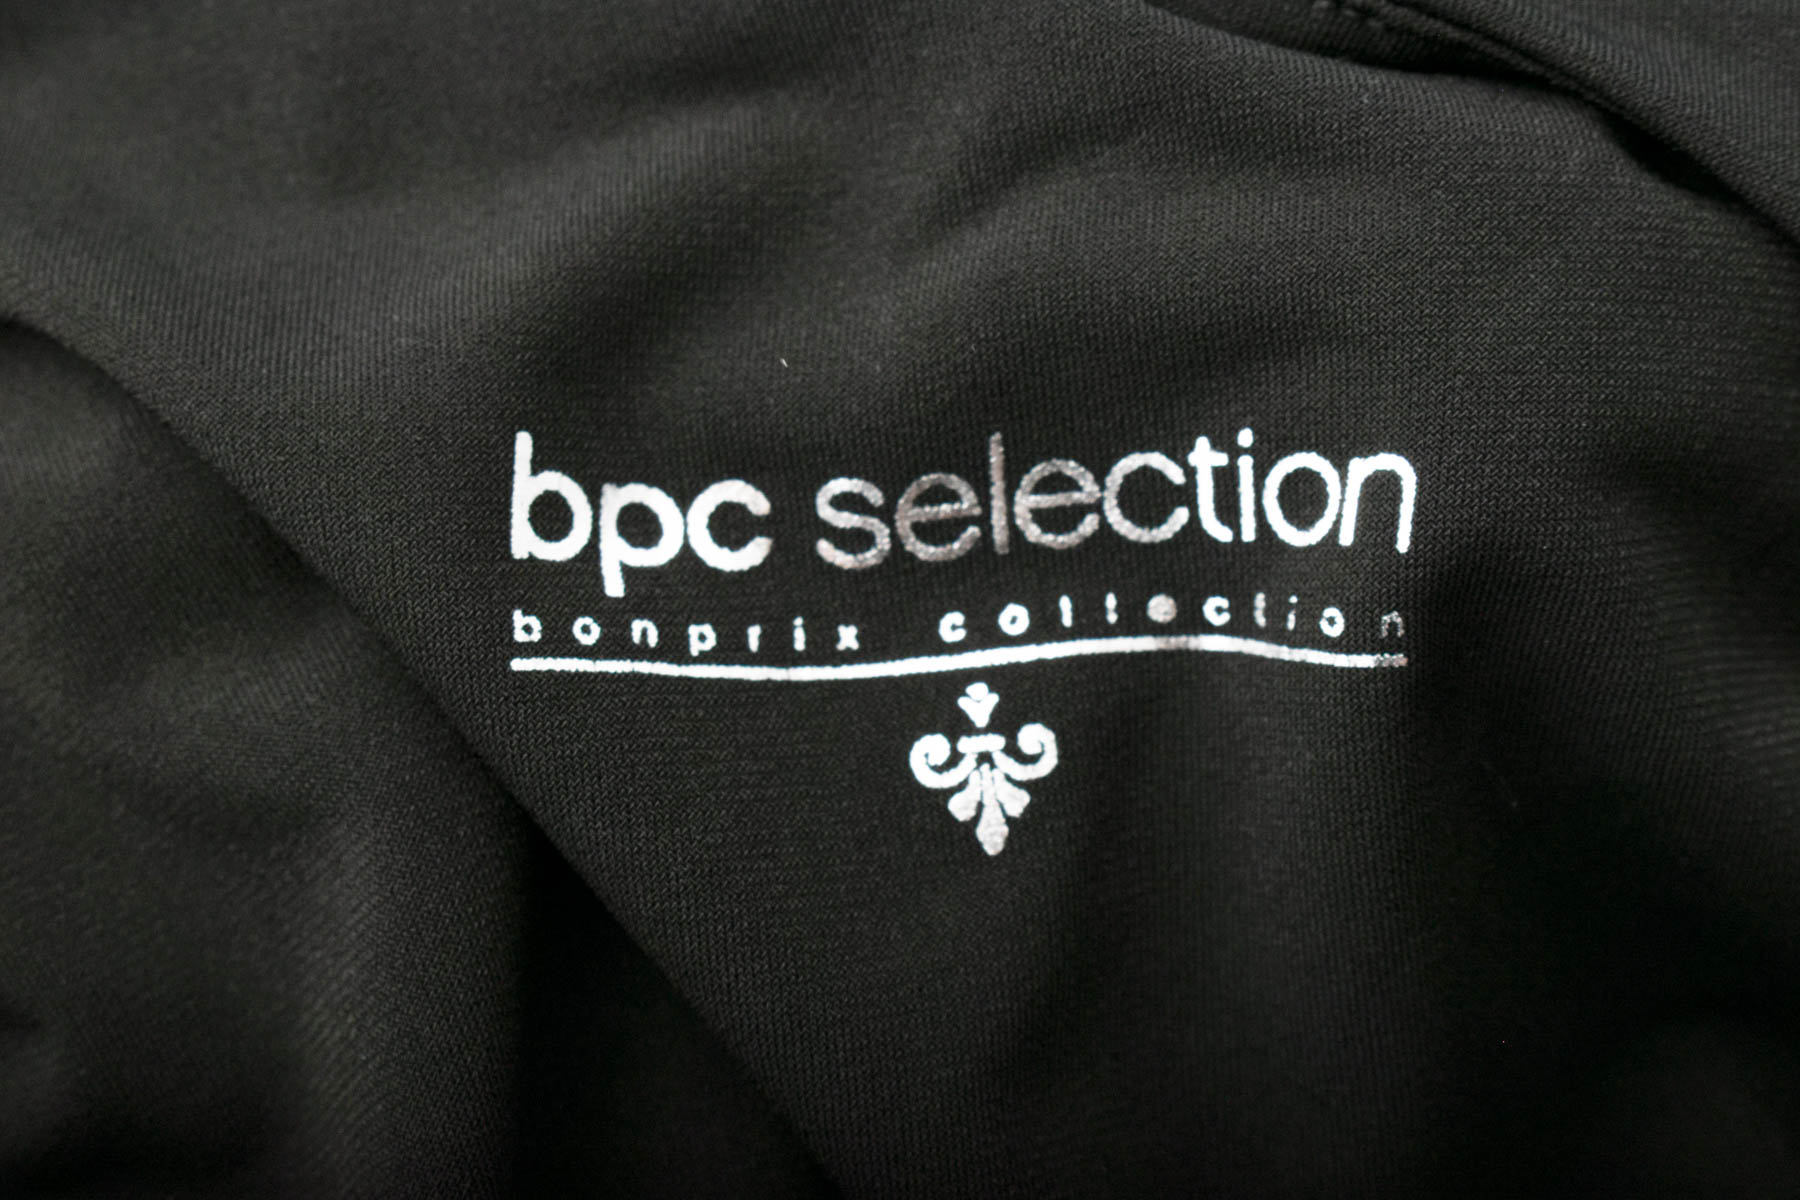 Rochiа - bpc selection bonprix collection - 2